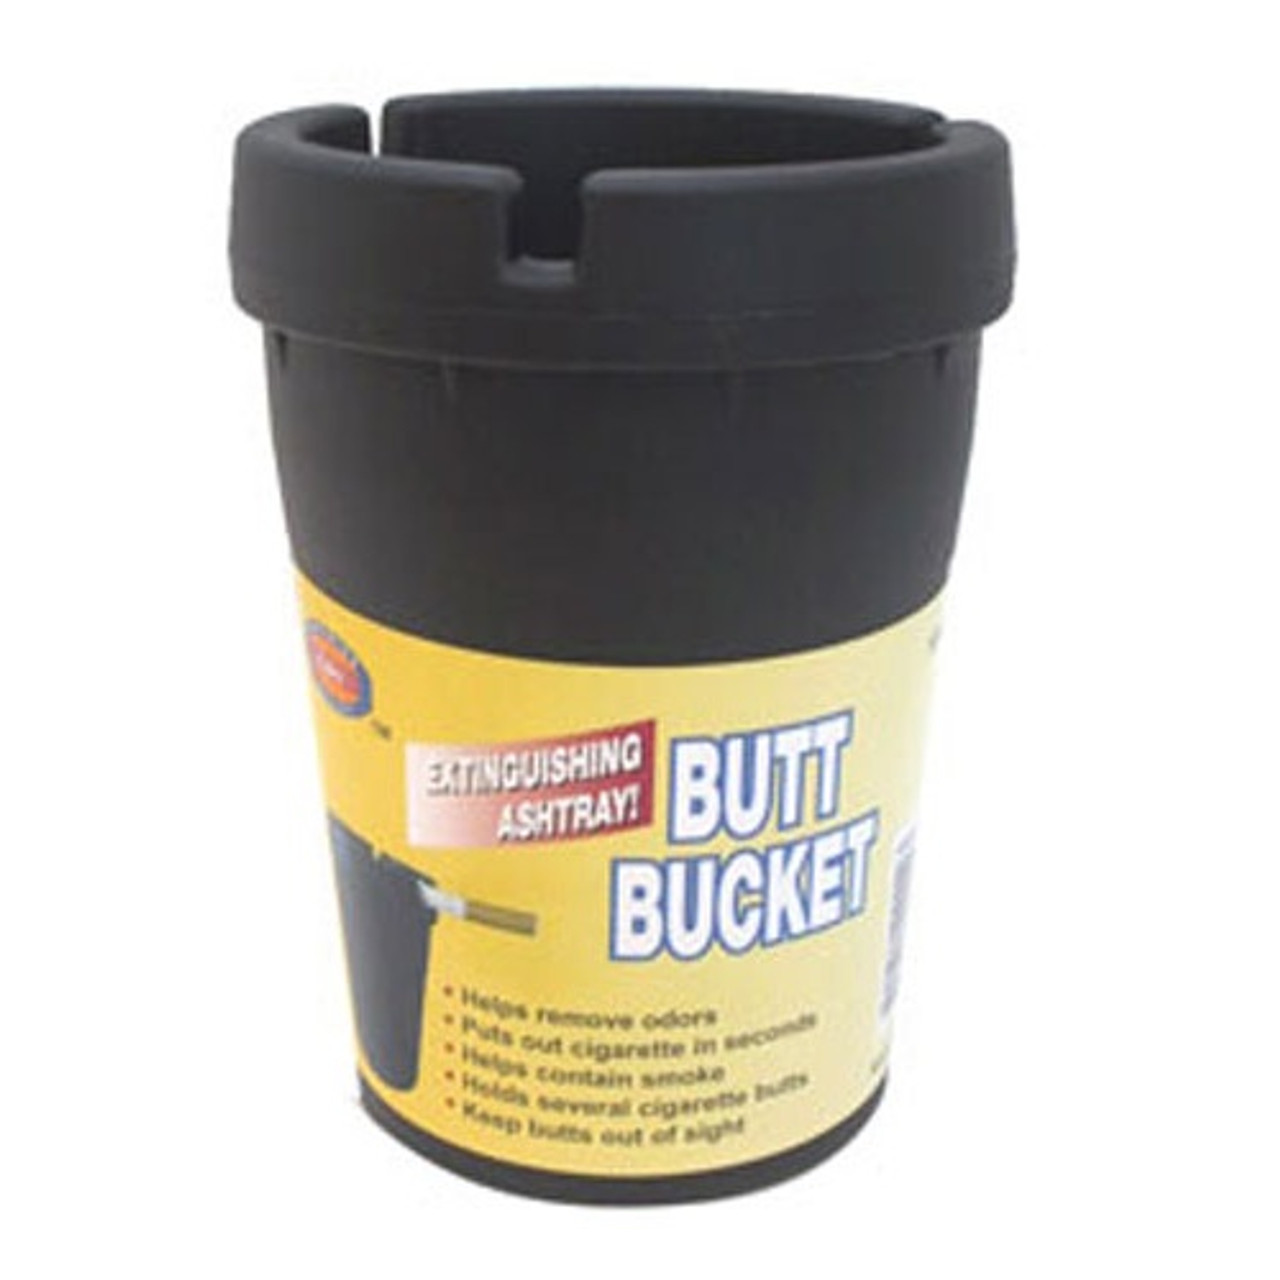 2 Glow Top Butt Bucket Car Cigarette Ashtray Odor Remover Glow in The Dark Cups, Black